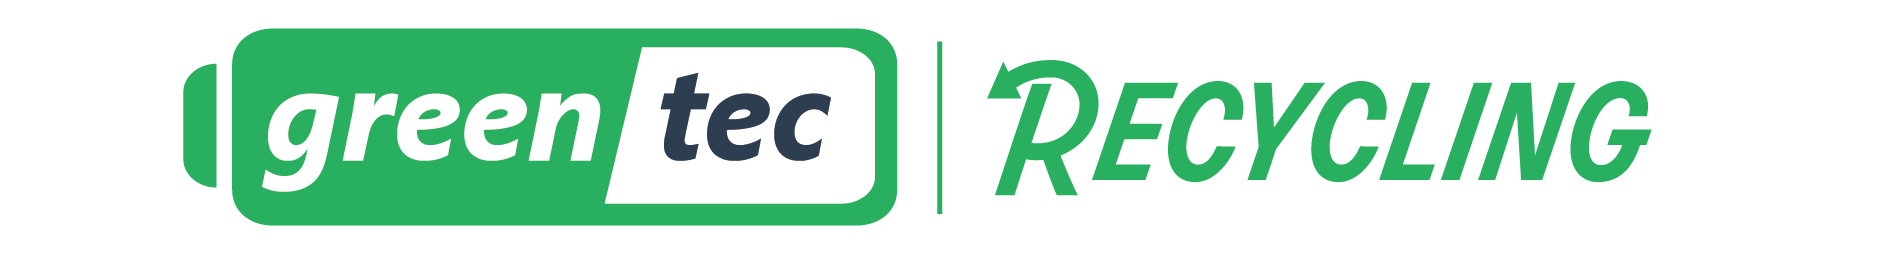 Greentec_recycling_logo